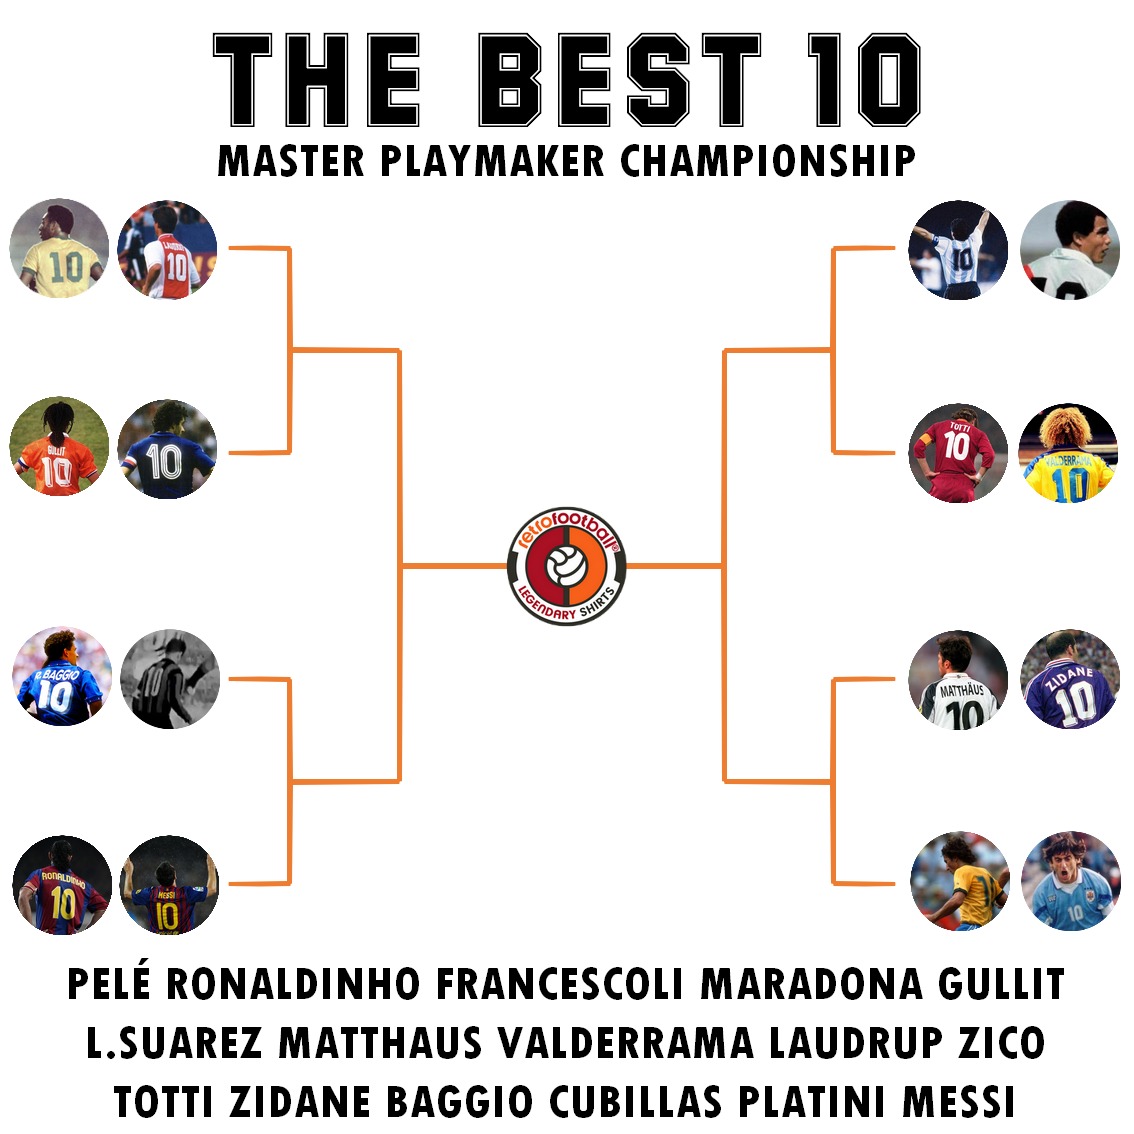 The best 10 - Master Playmaker Championship de Retrofootball - el cuadro